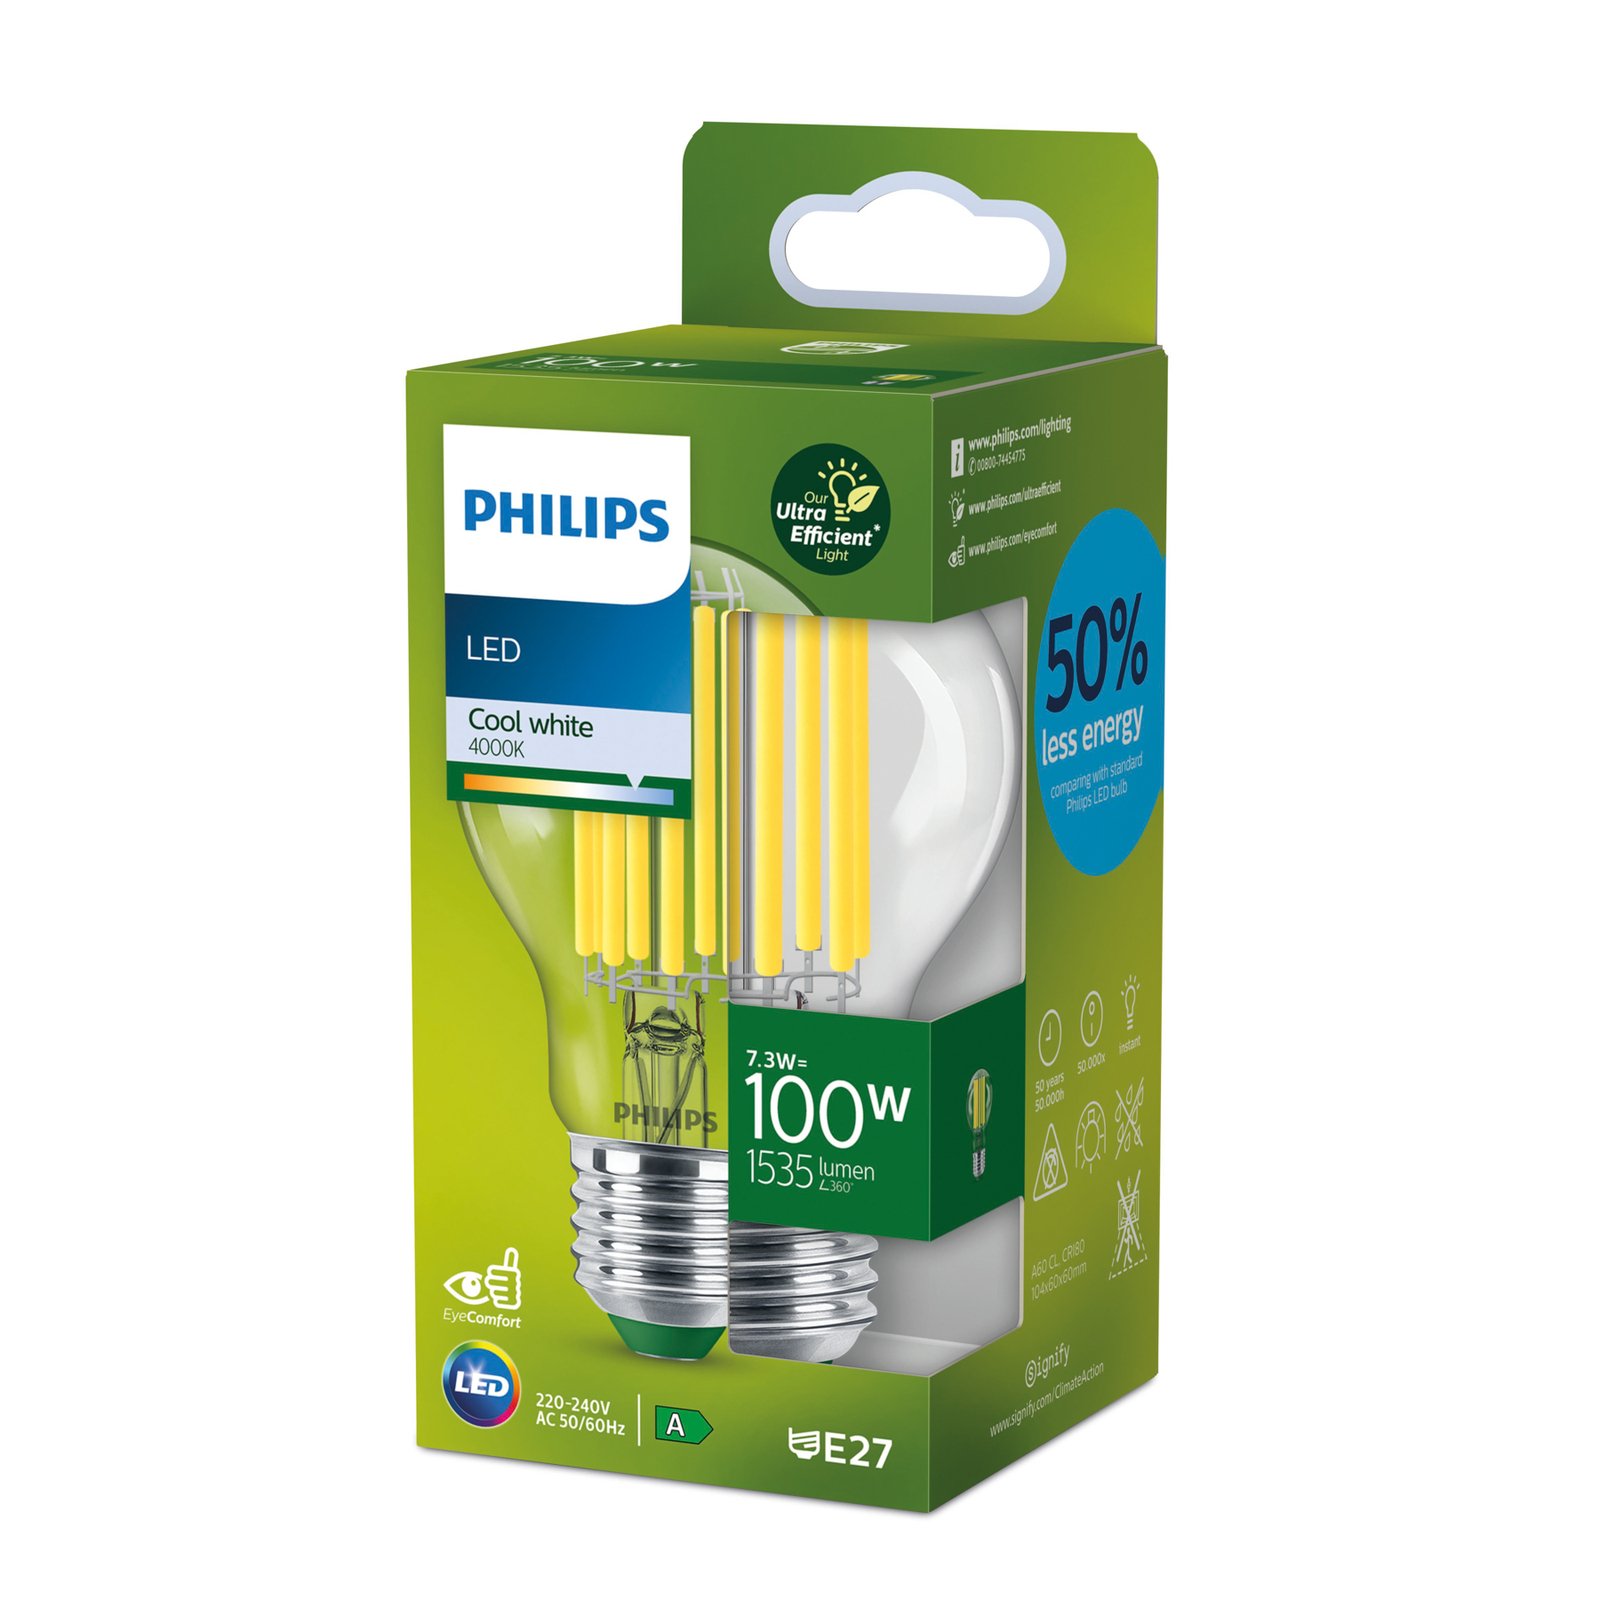 Philips E27 LED svjetiljka A60 7,3 W 1535 lm 4,000K prozirna